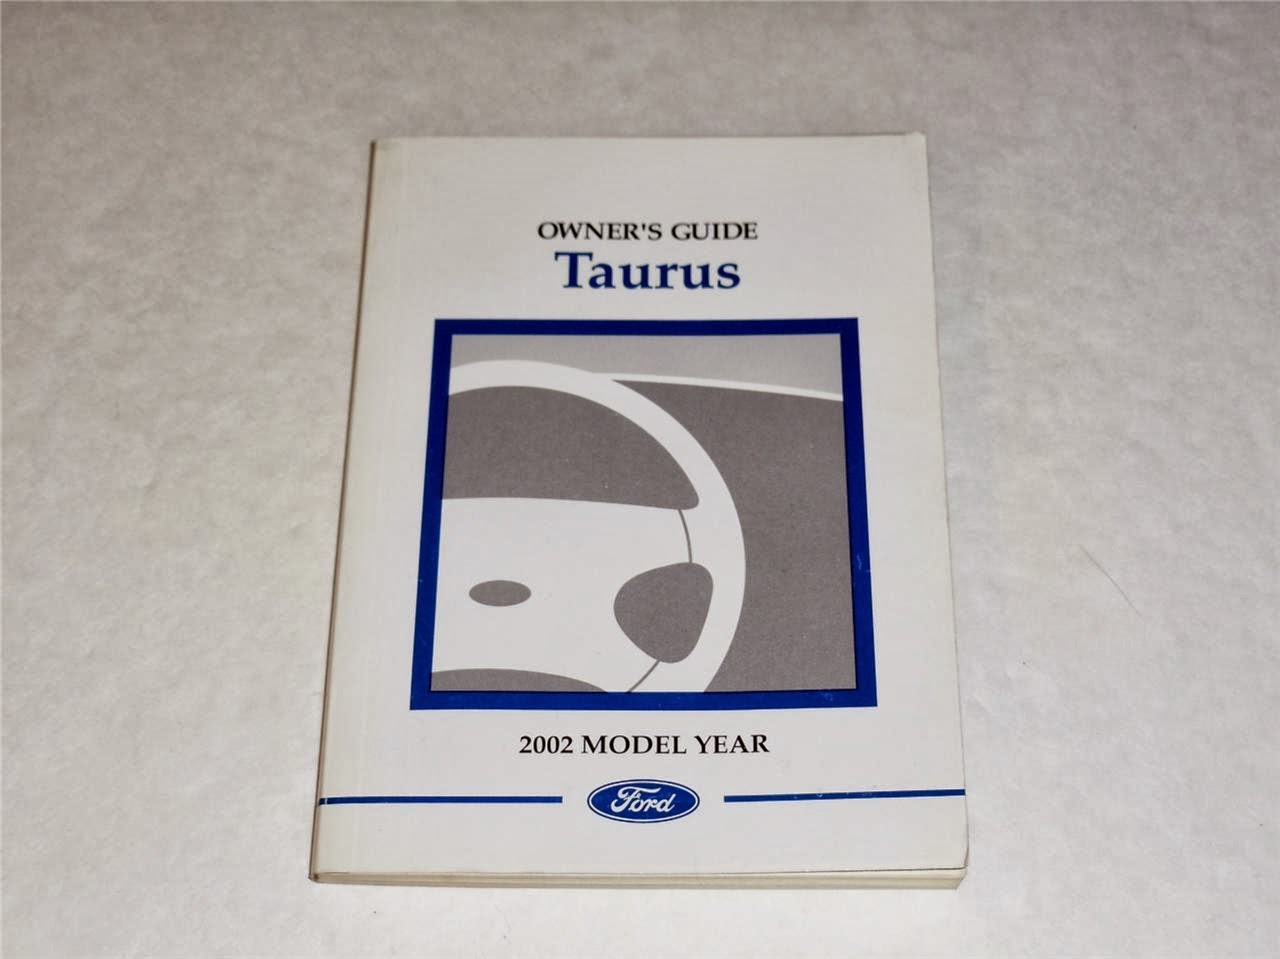 2002 Ford manual owner taurus